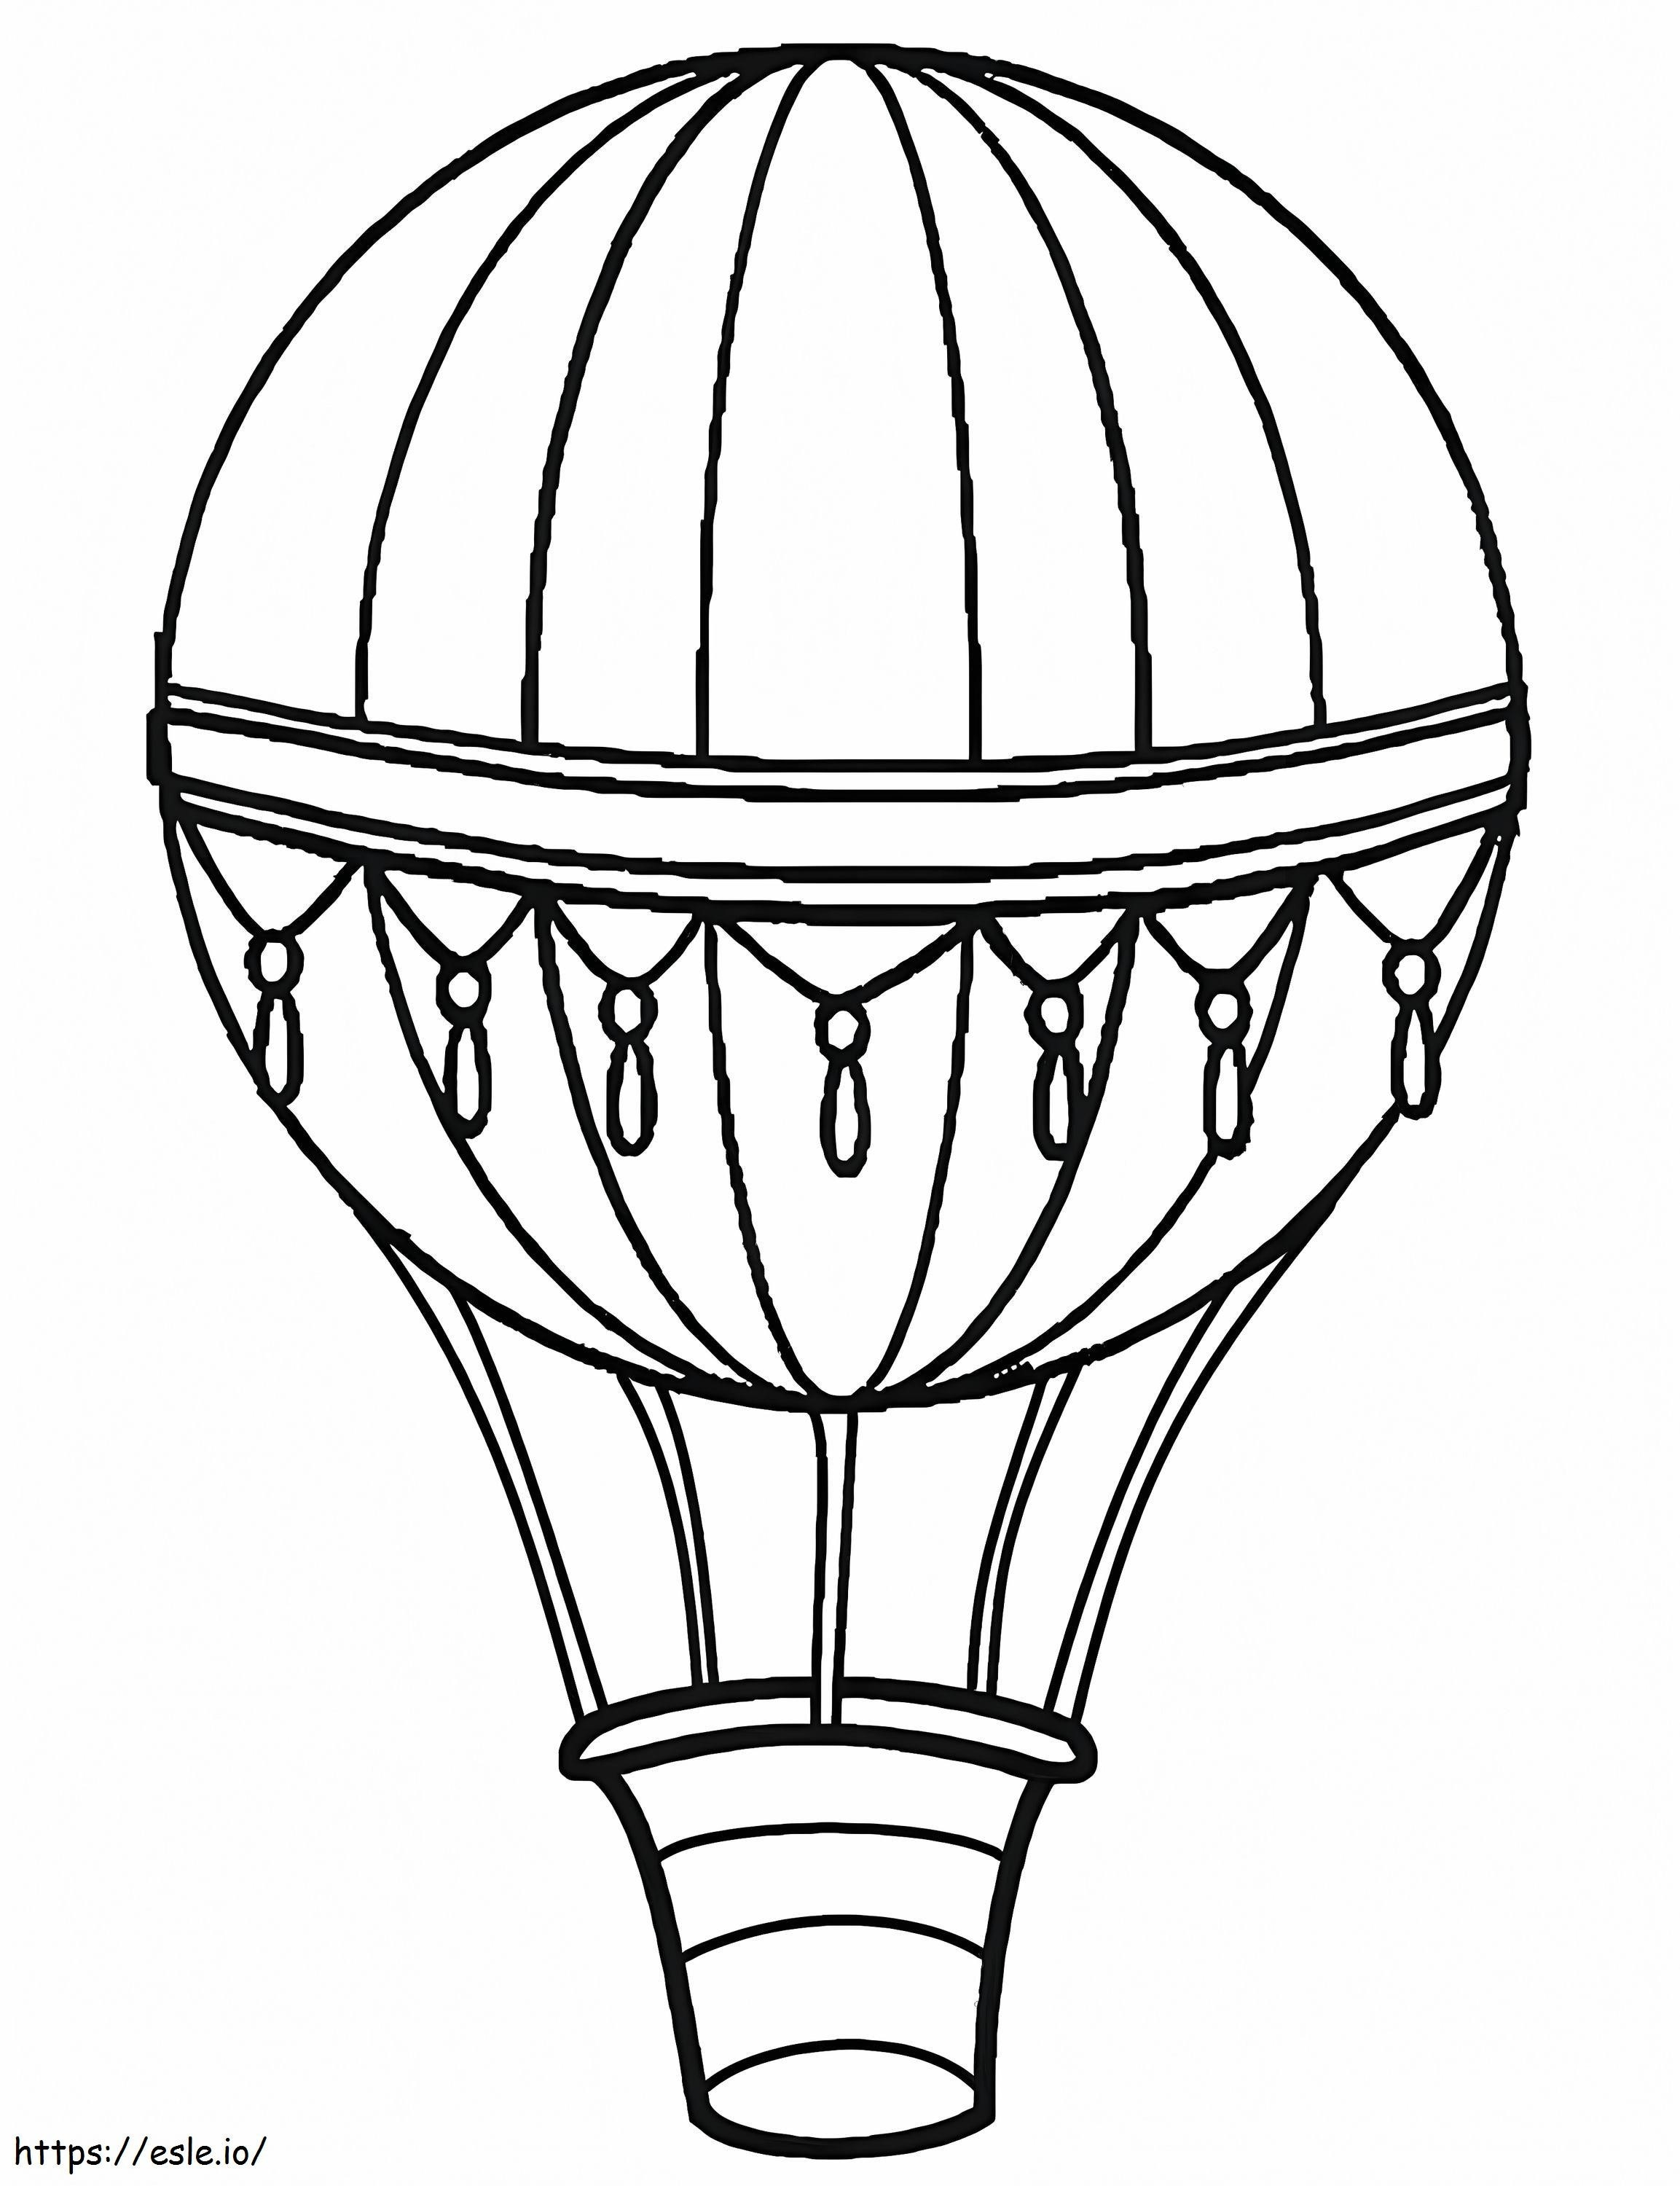 Normal Hot Air Balloon 6 coloring page